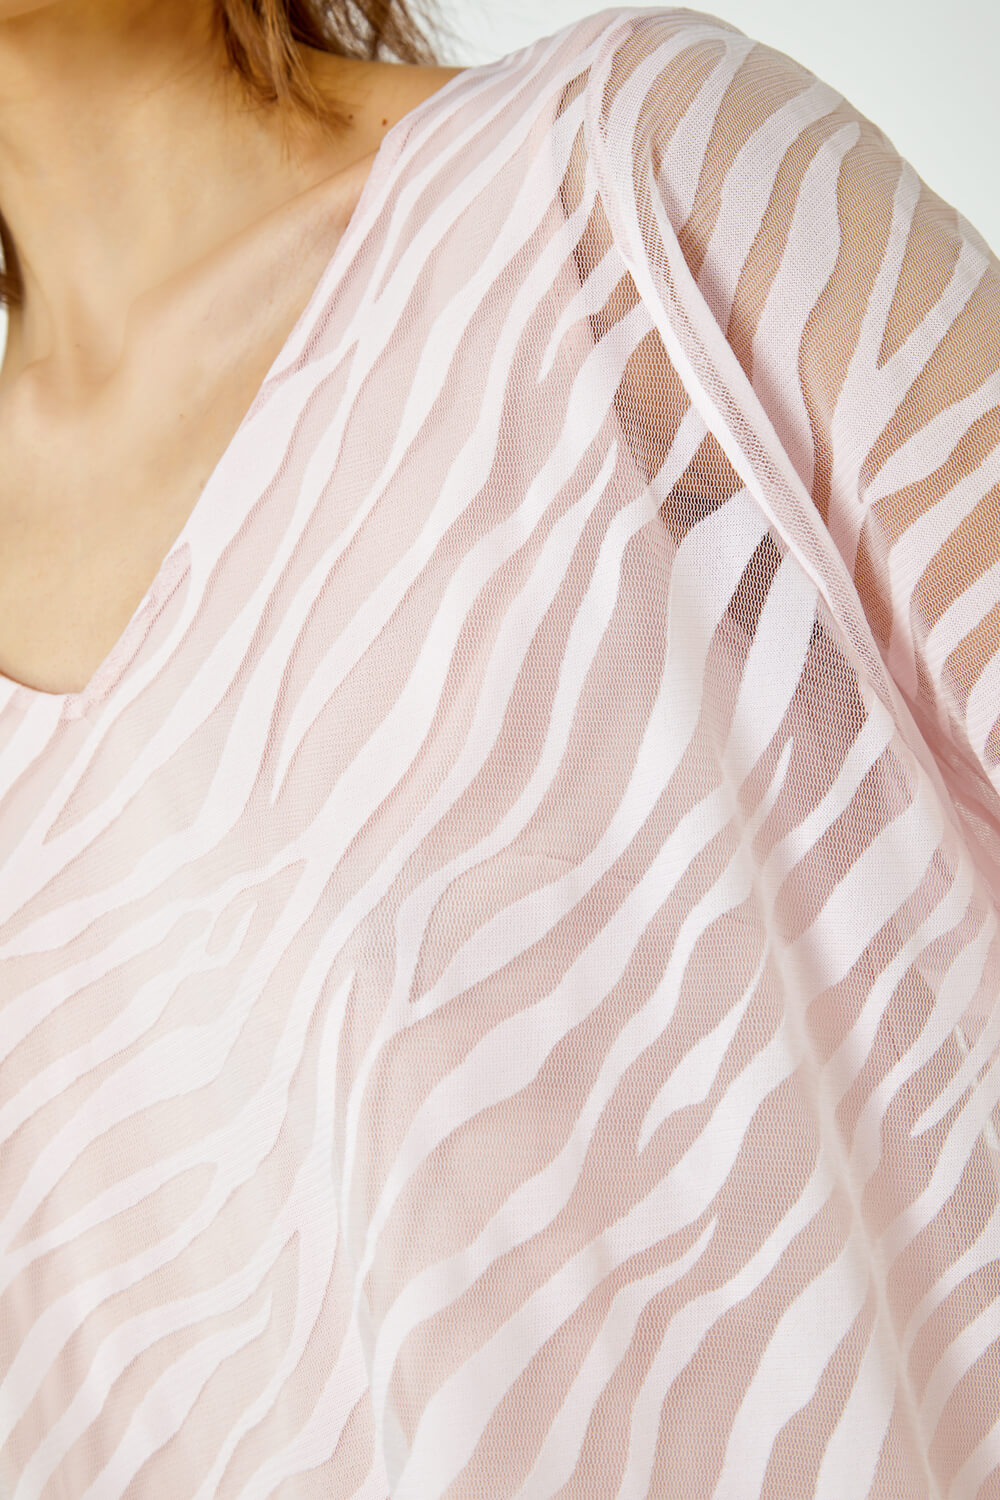 Light Pink Textured Animal Print Top, Image 5 of 5